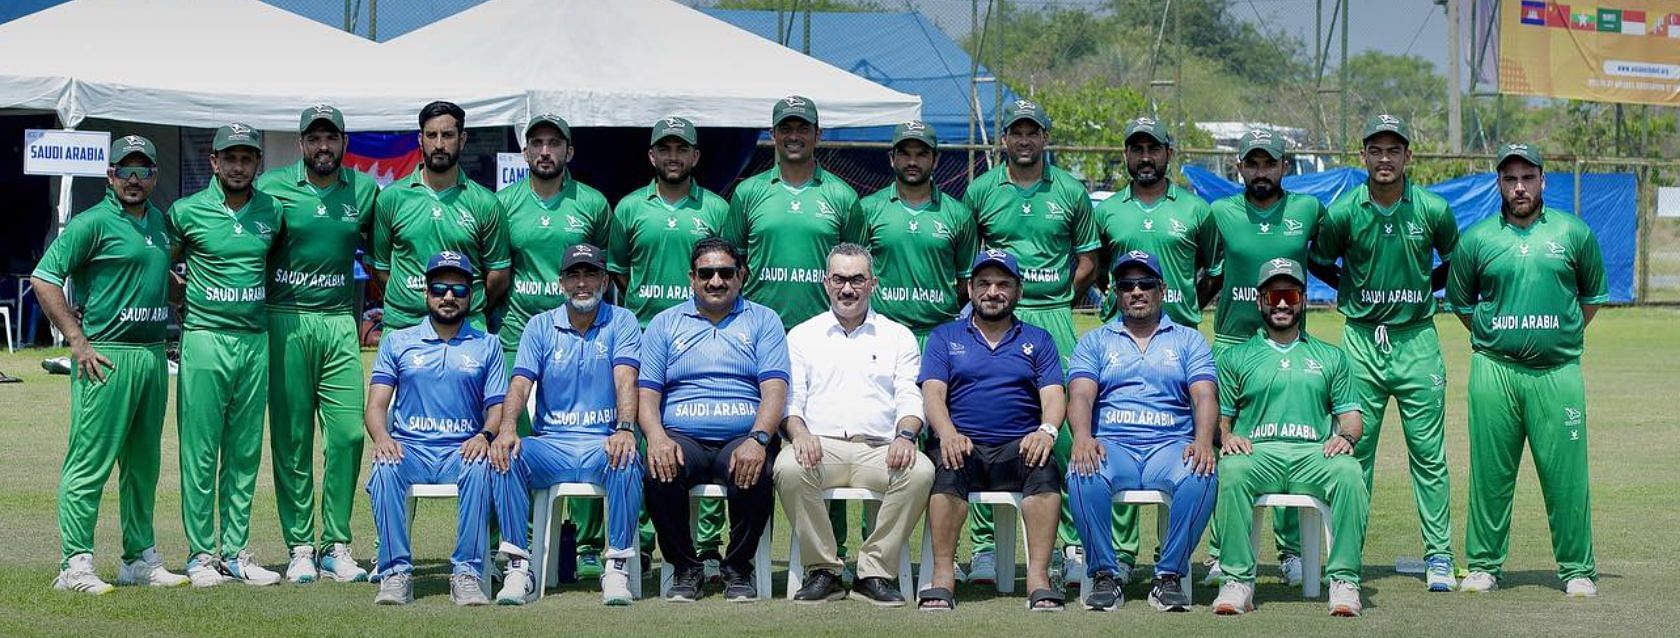 Photo - Saudi Arabia Cricket Team